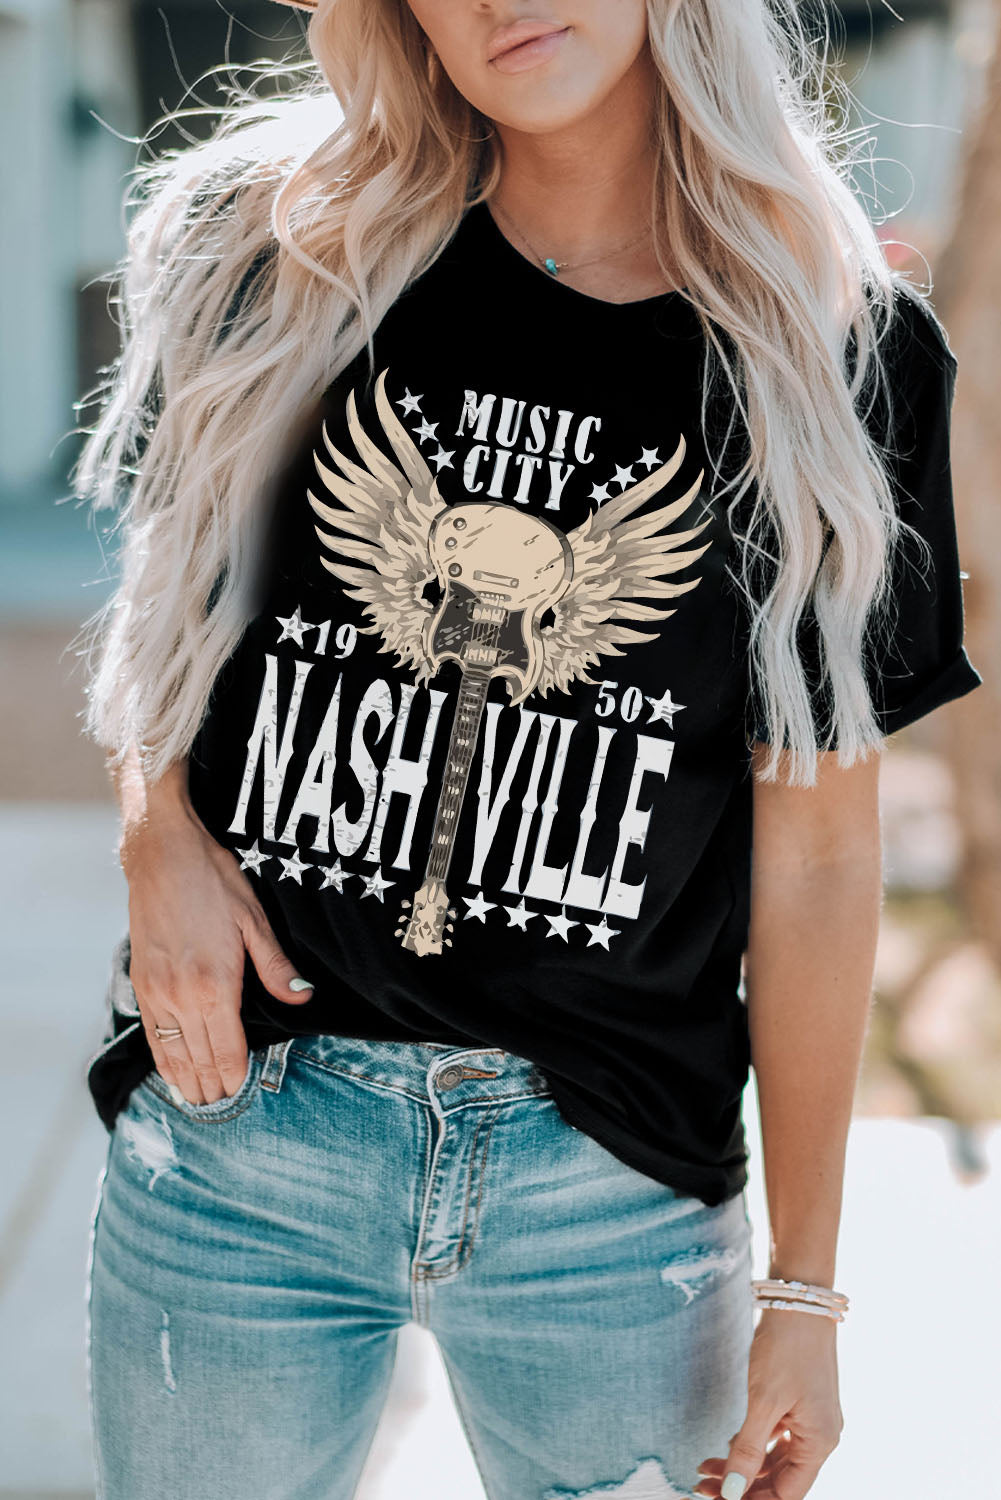 Nashville Cuffed Sleeve Graphic T-Shirt